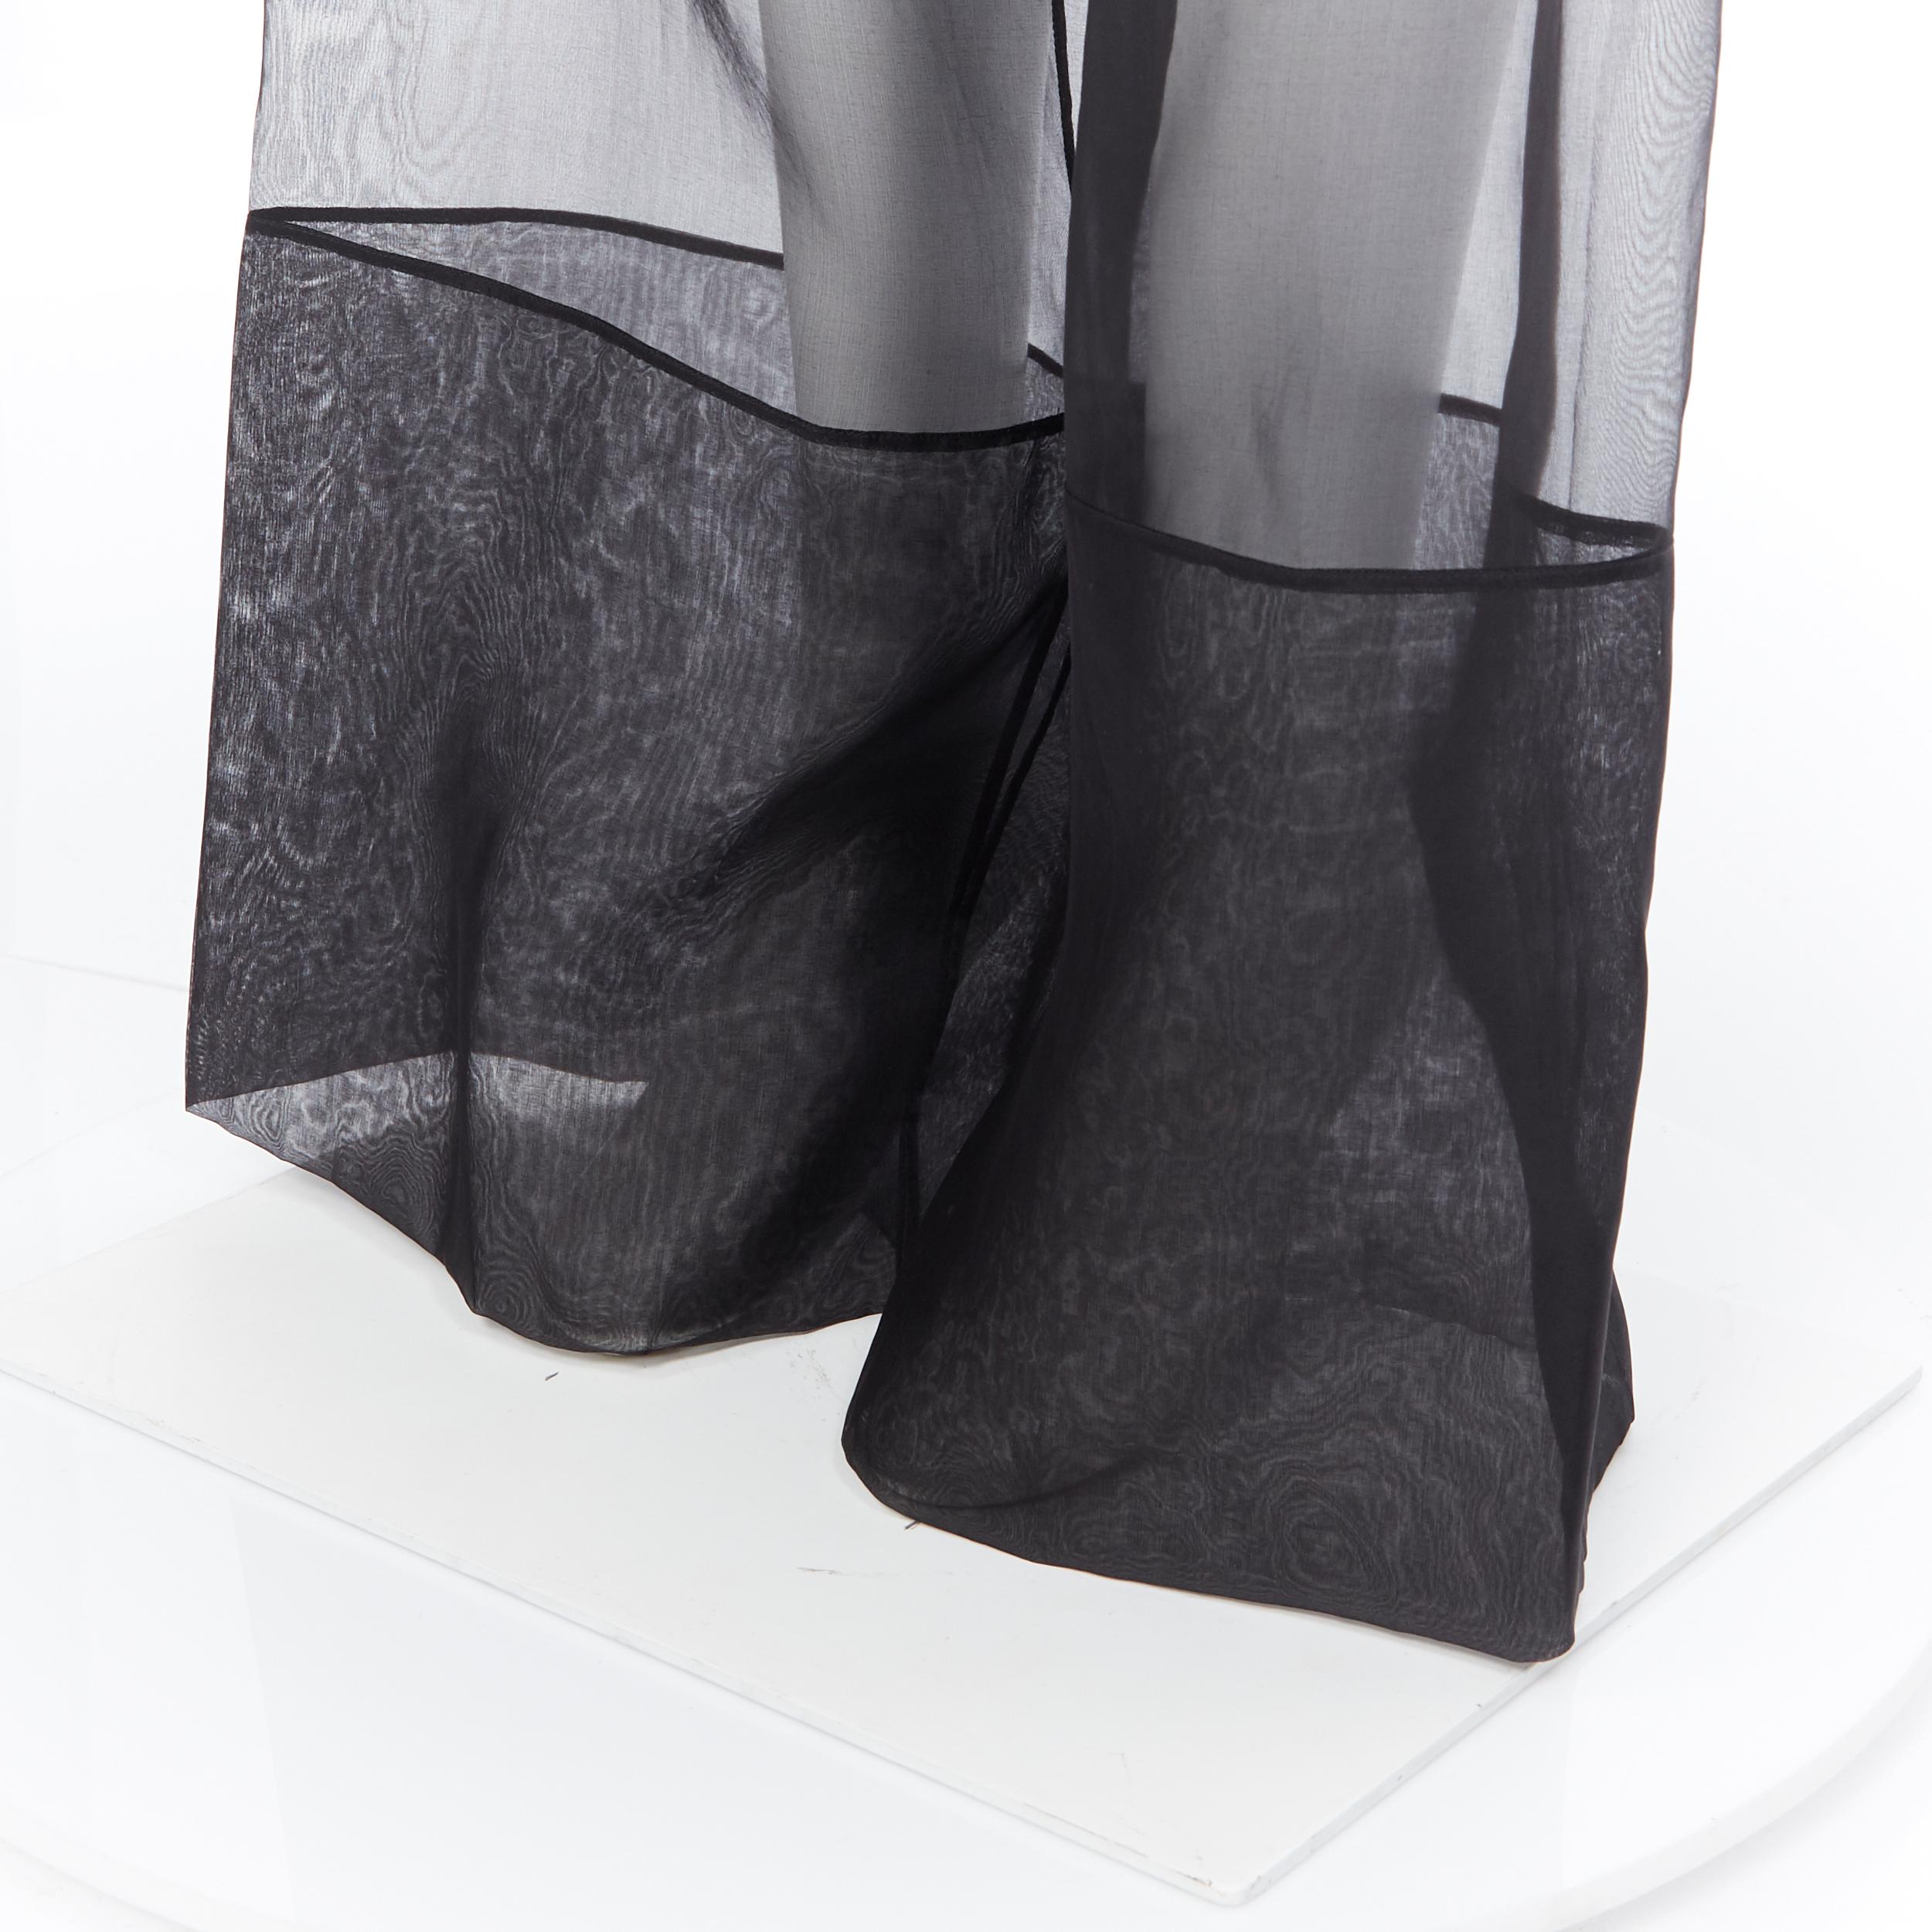 Women's new LA PERLA SS15 Runway silk organza high waisted sheer wide leg pants IT42 M